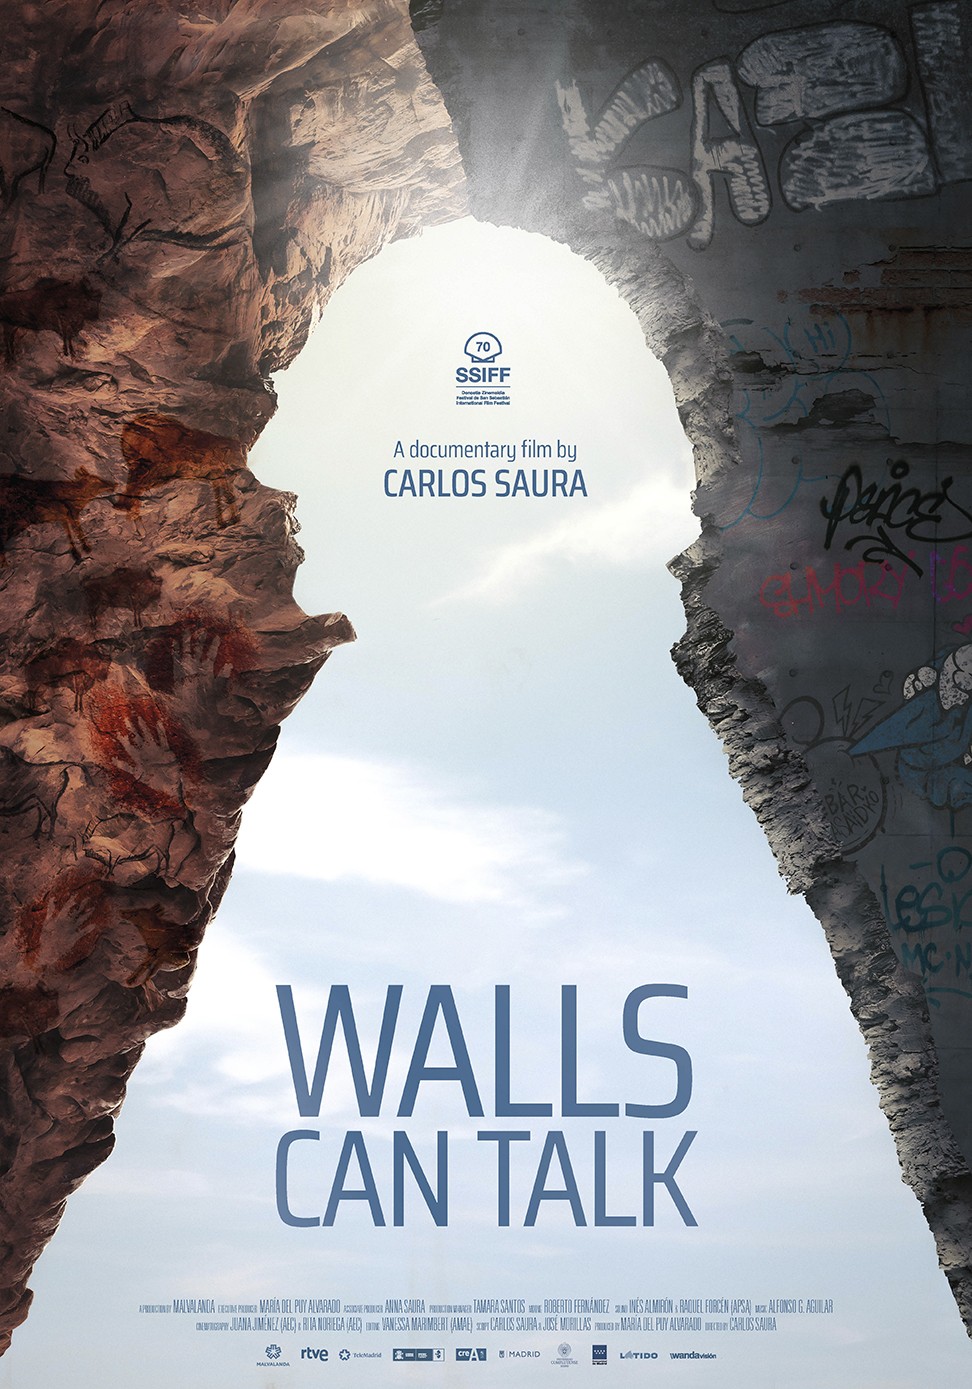 WALLS CAN TALK